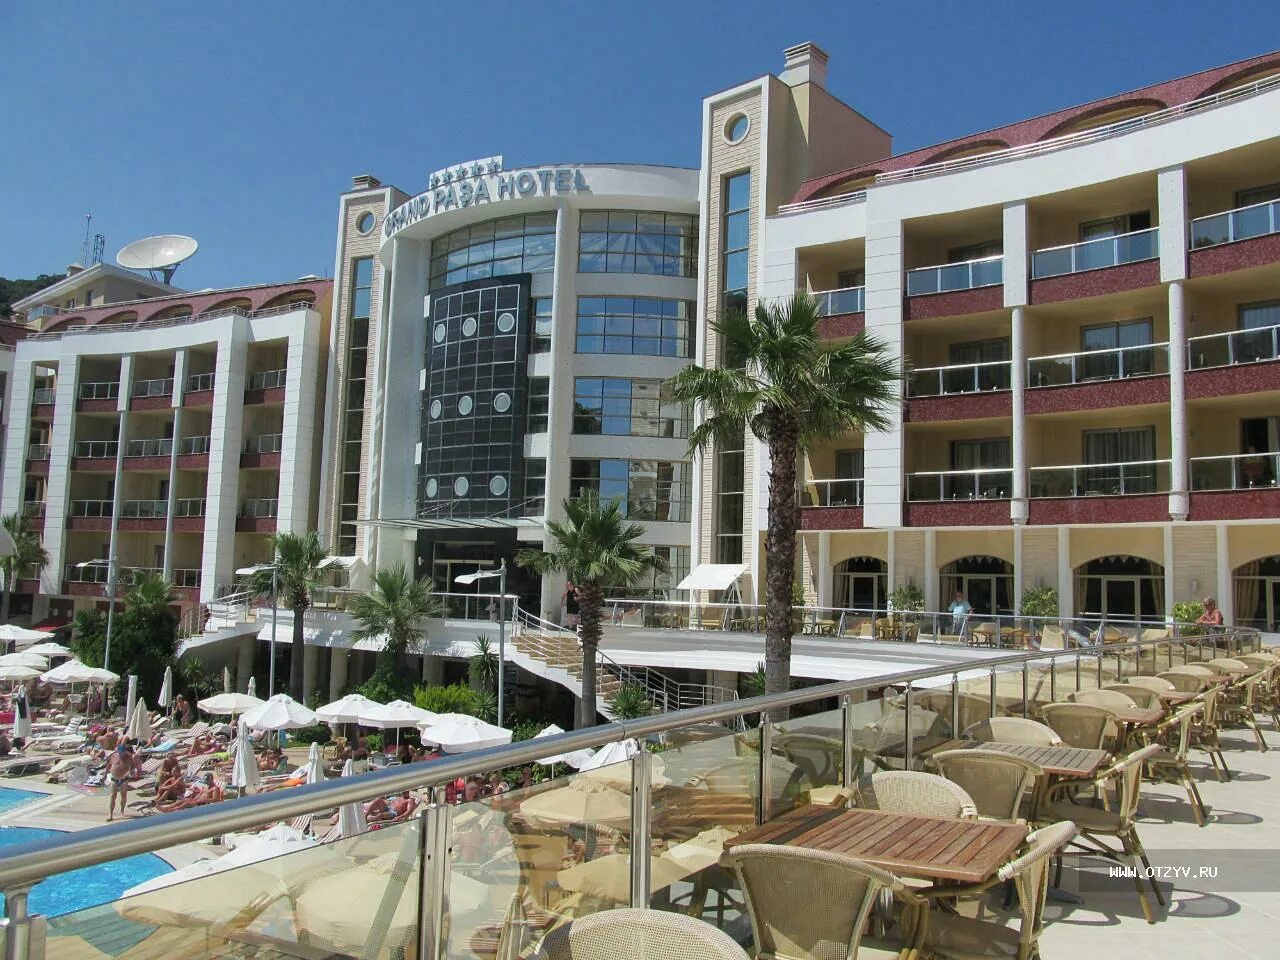 Турция Grand Pasa 5* Мармарис-центр, Мармарис. Гранд Плаза Мармарис. Отель Гранд паса Мармарис. Grand pasa hotel